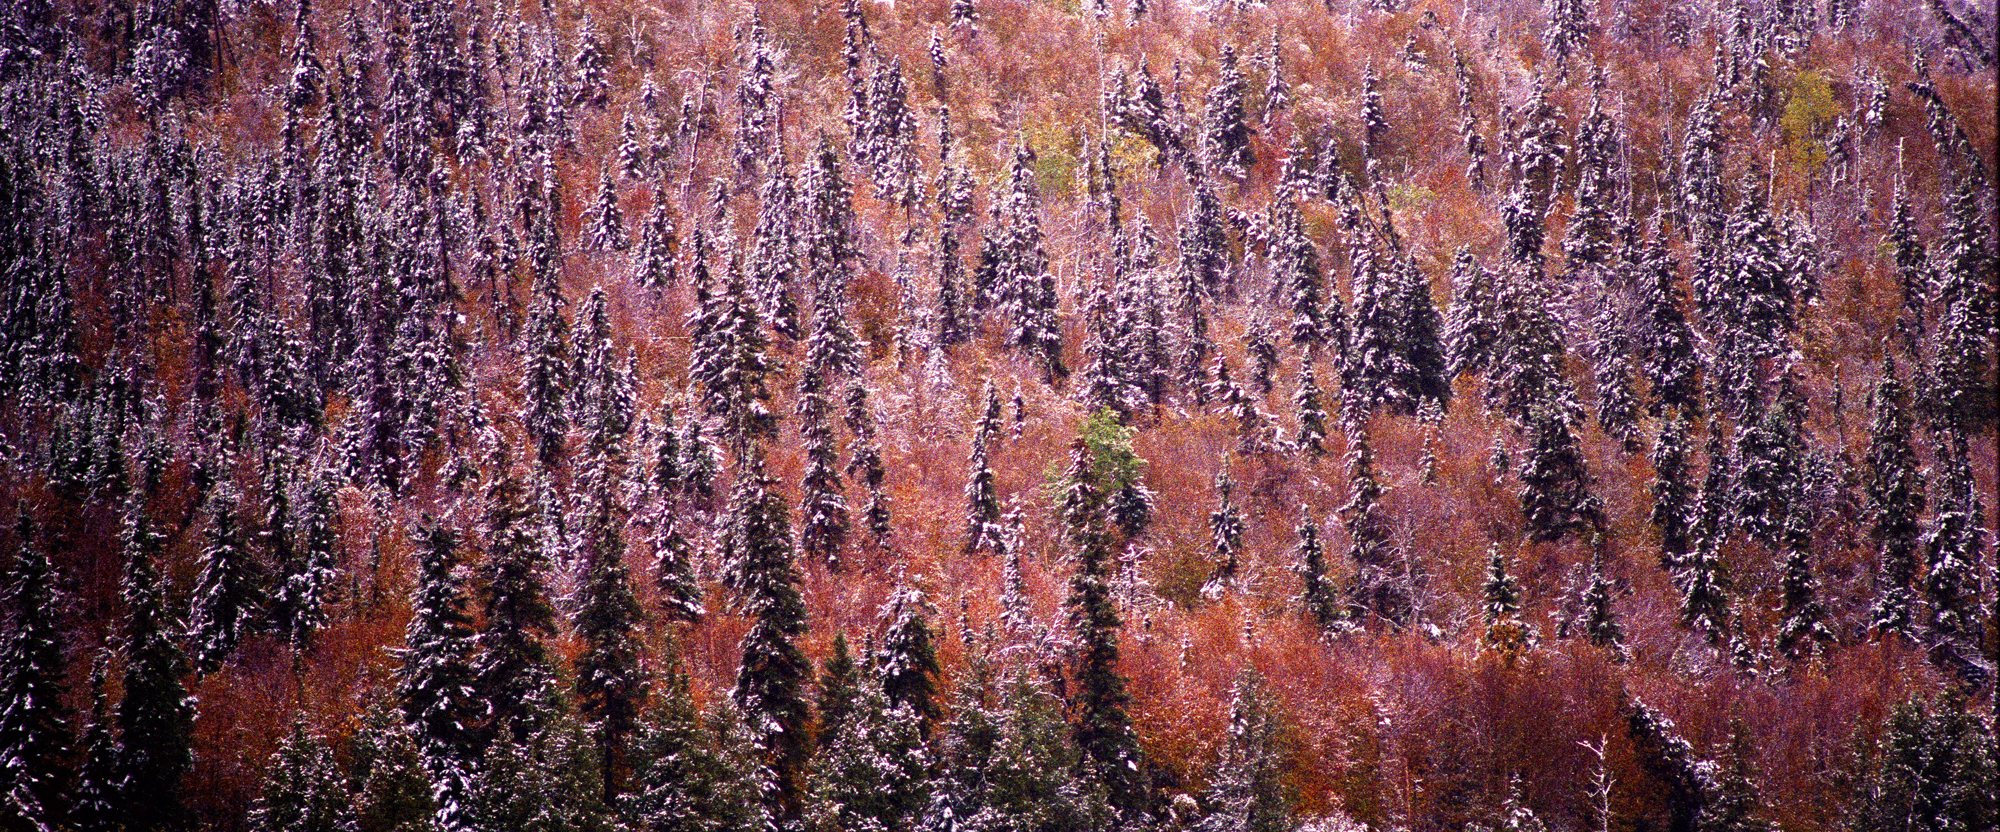 Boreal Forest Autumn